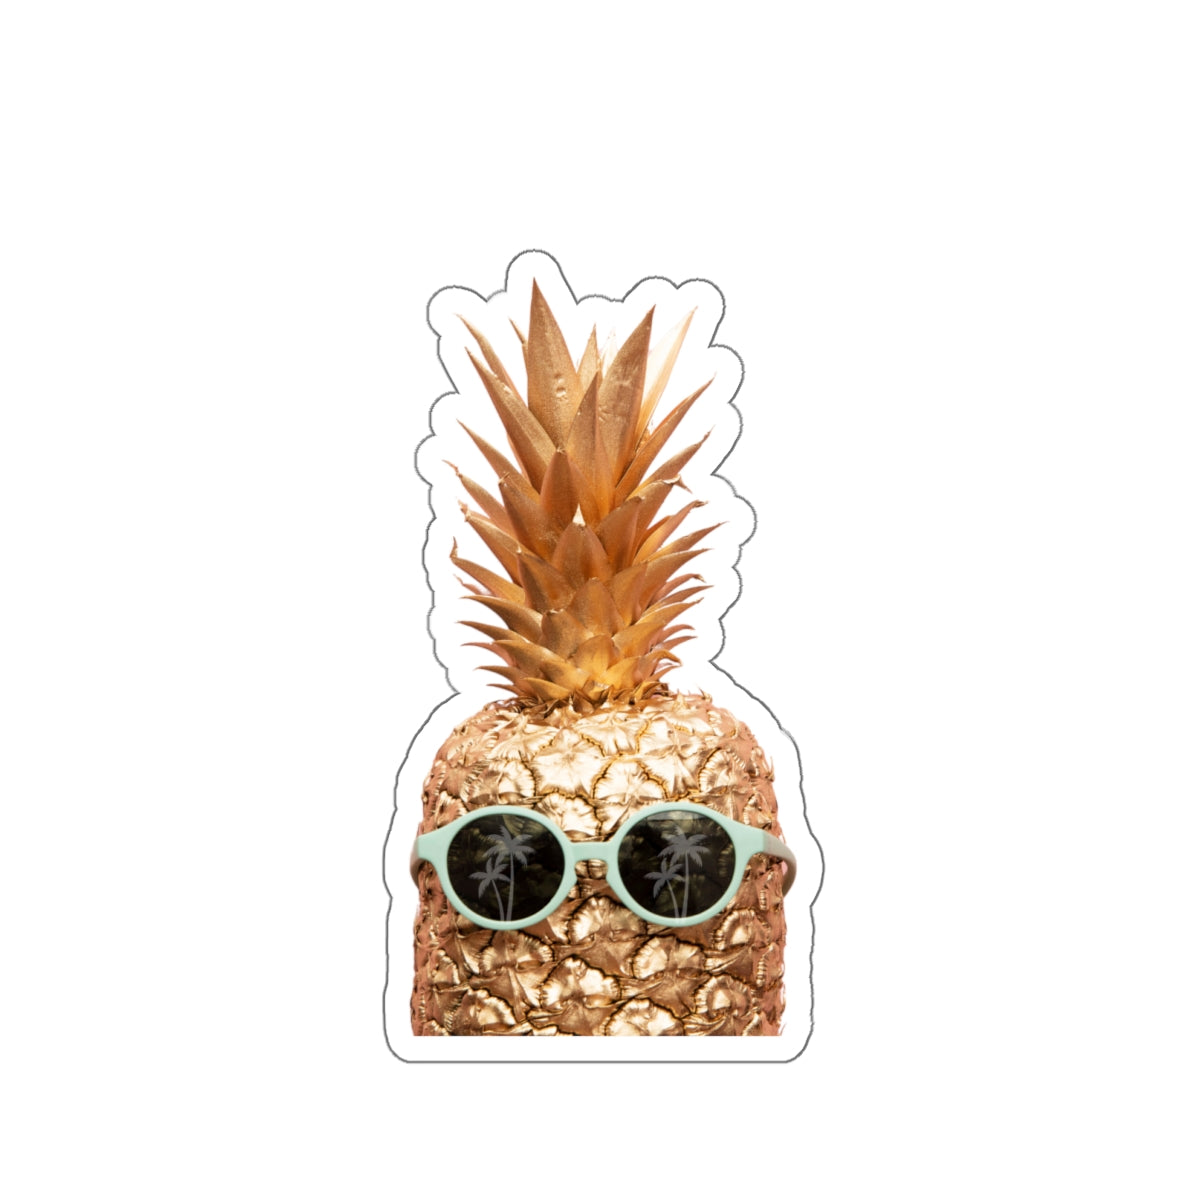 Sticker - Pineapple face